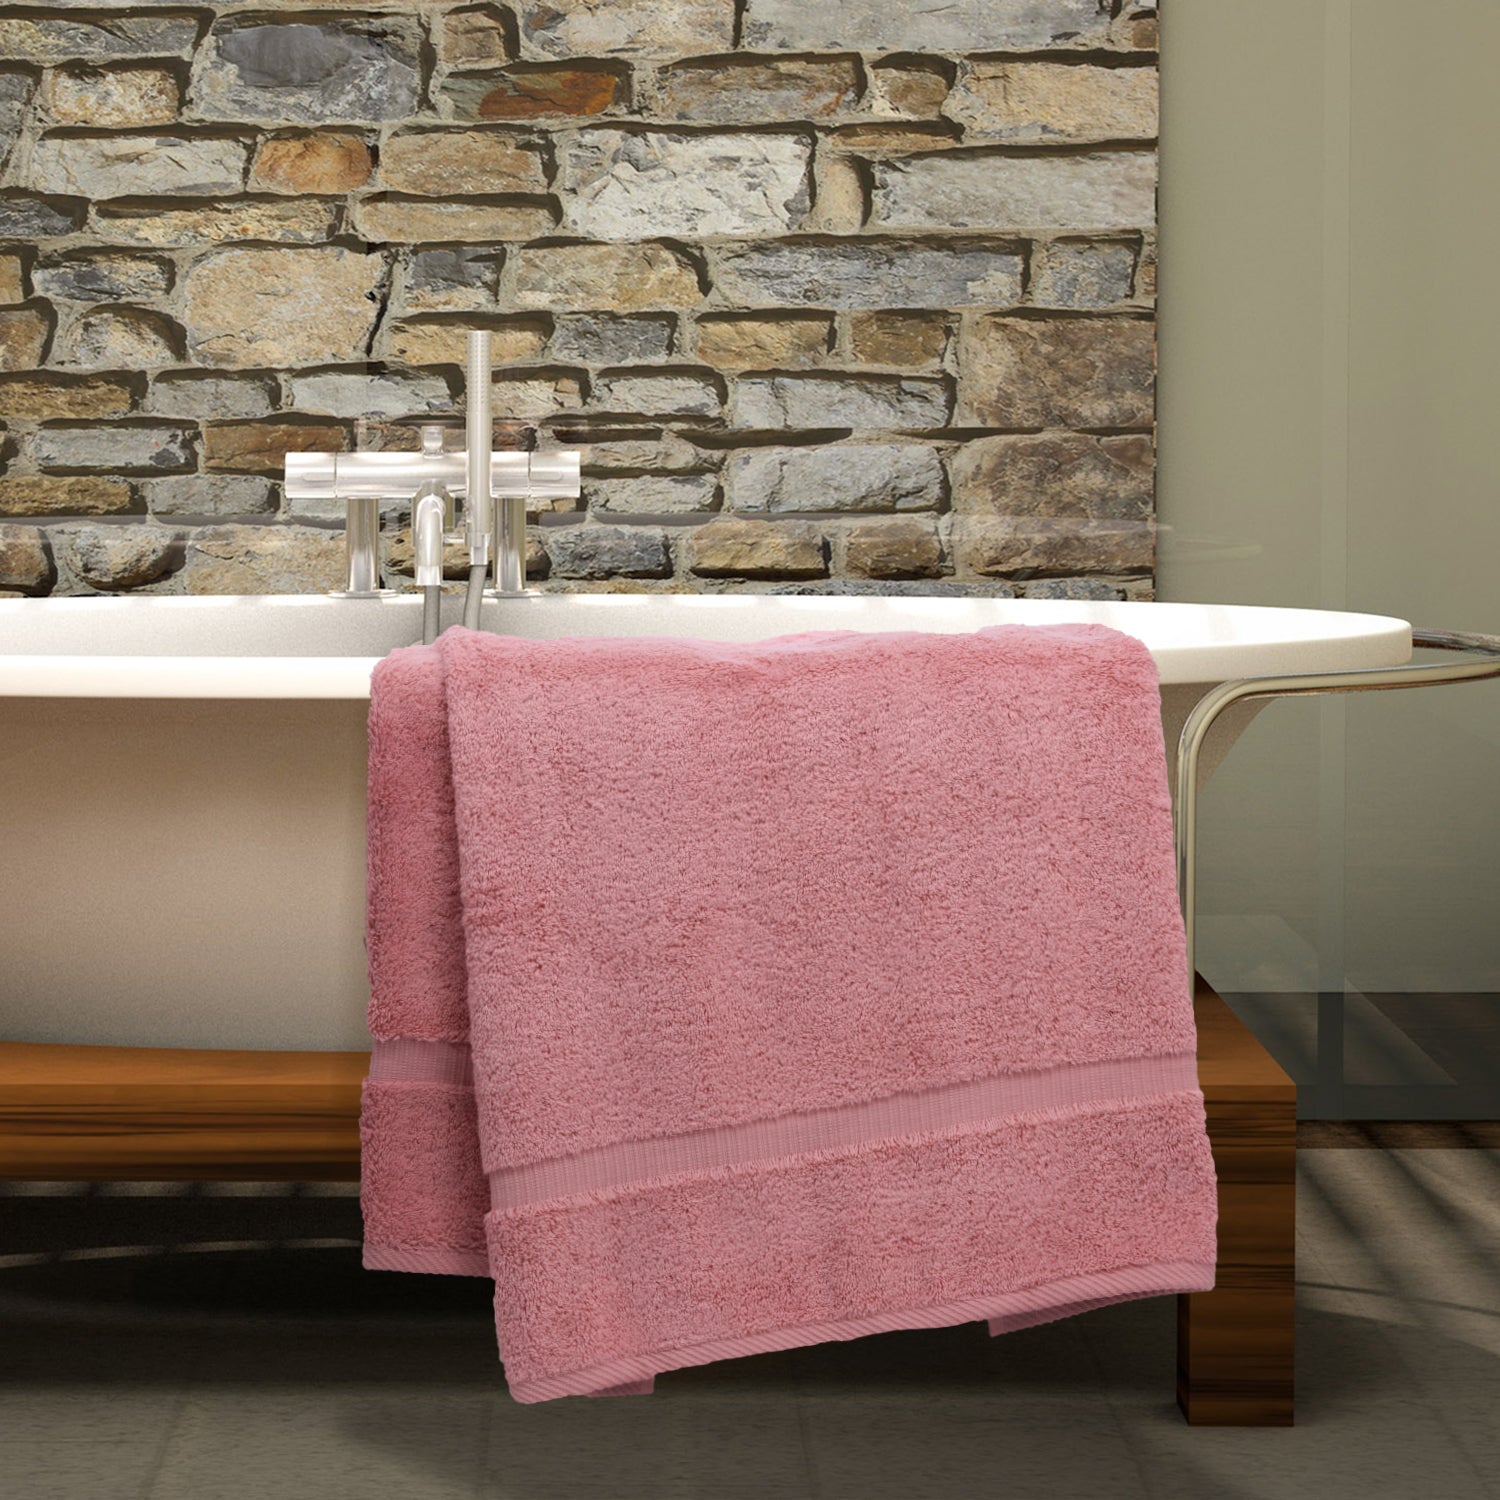 4 PIECE LUXURY LARGE SIZE BATH TOWEL SET FOR HOME HOTEL SPAS GUEST